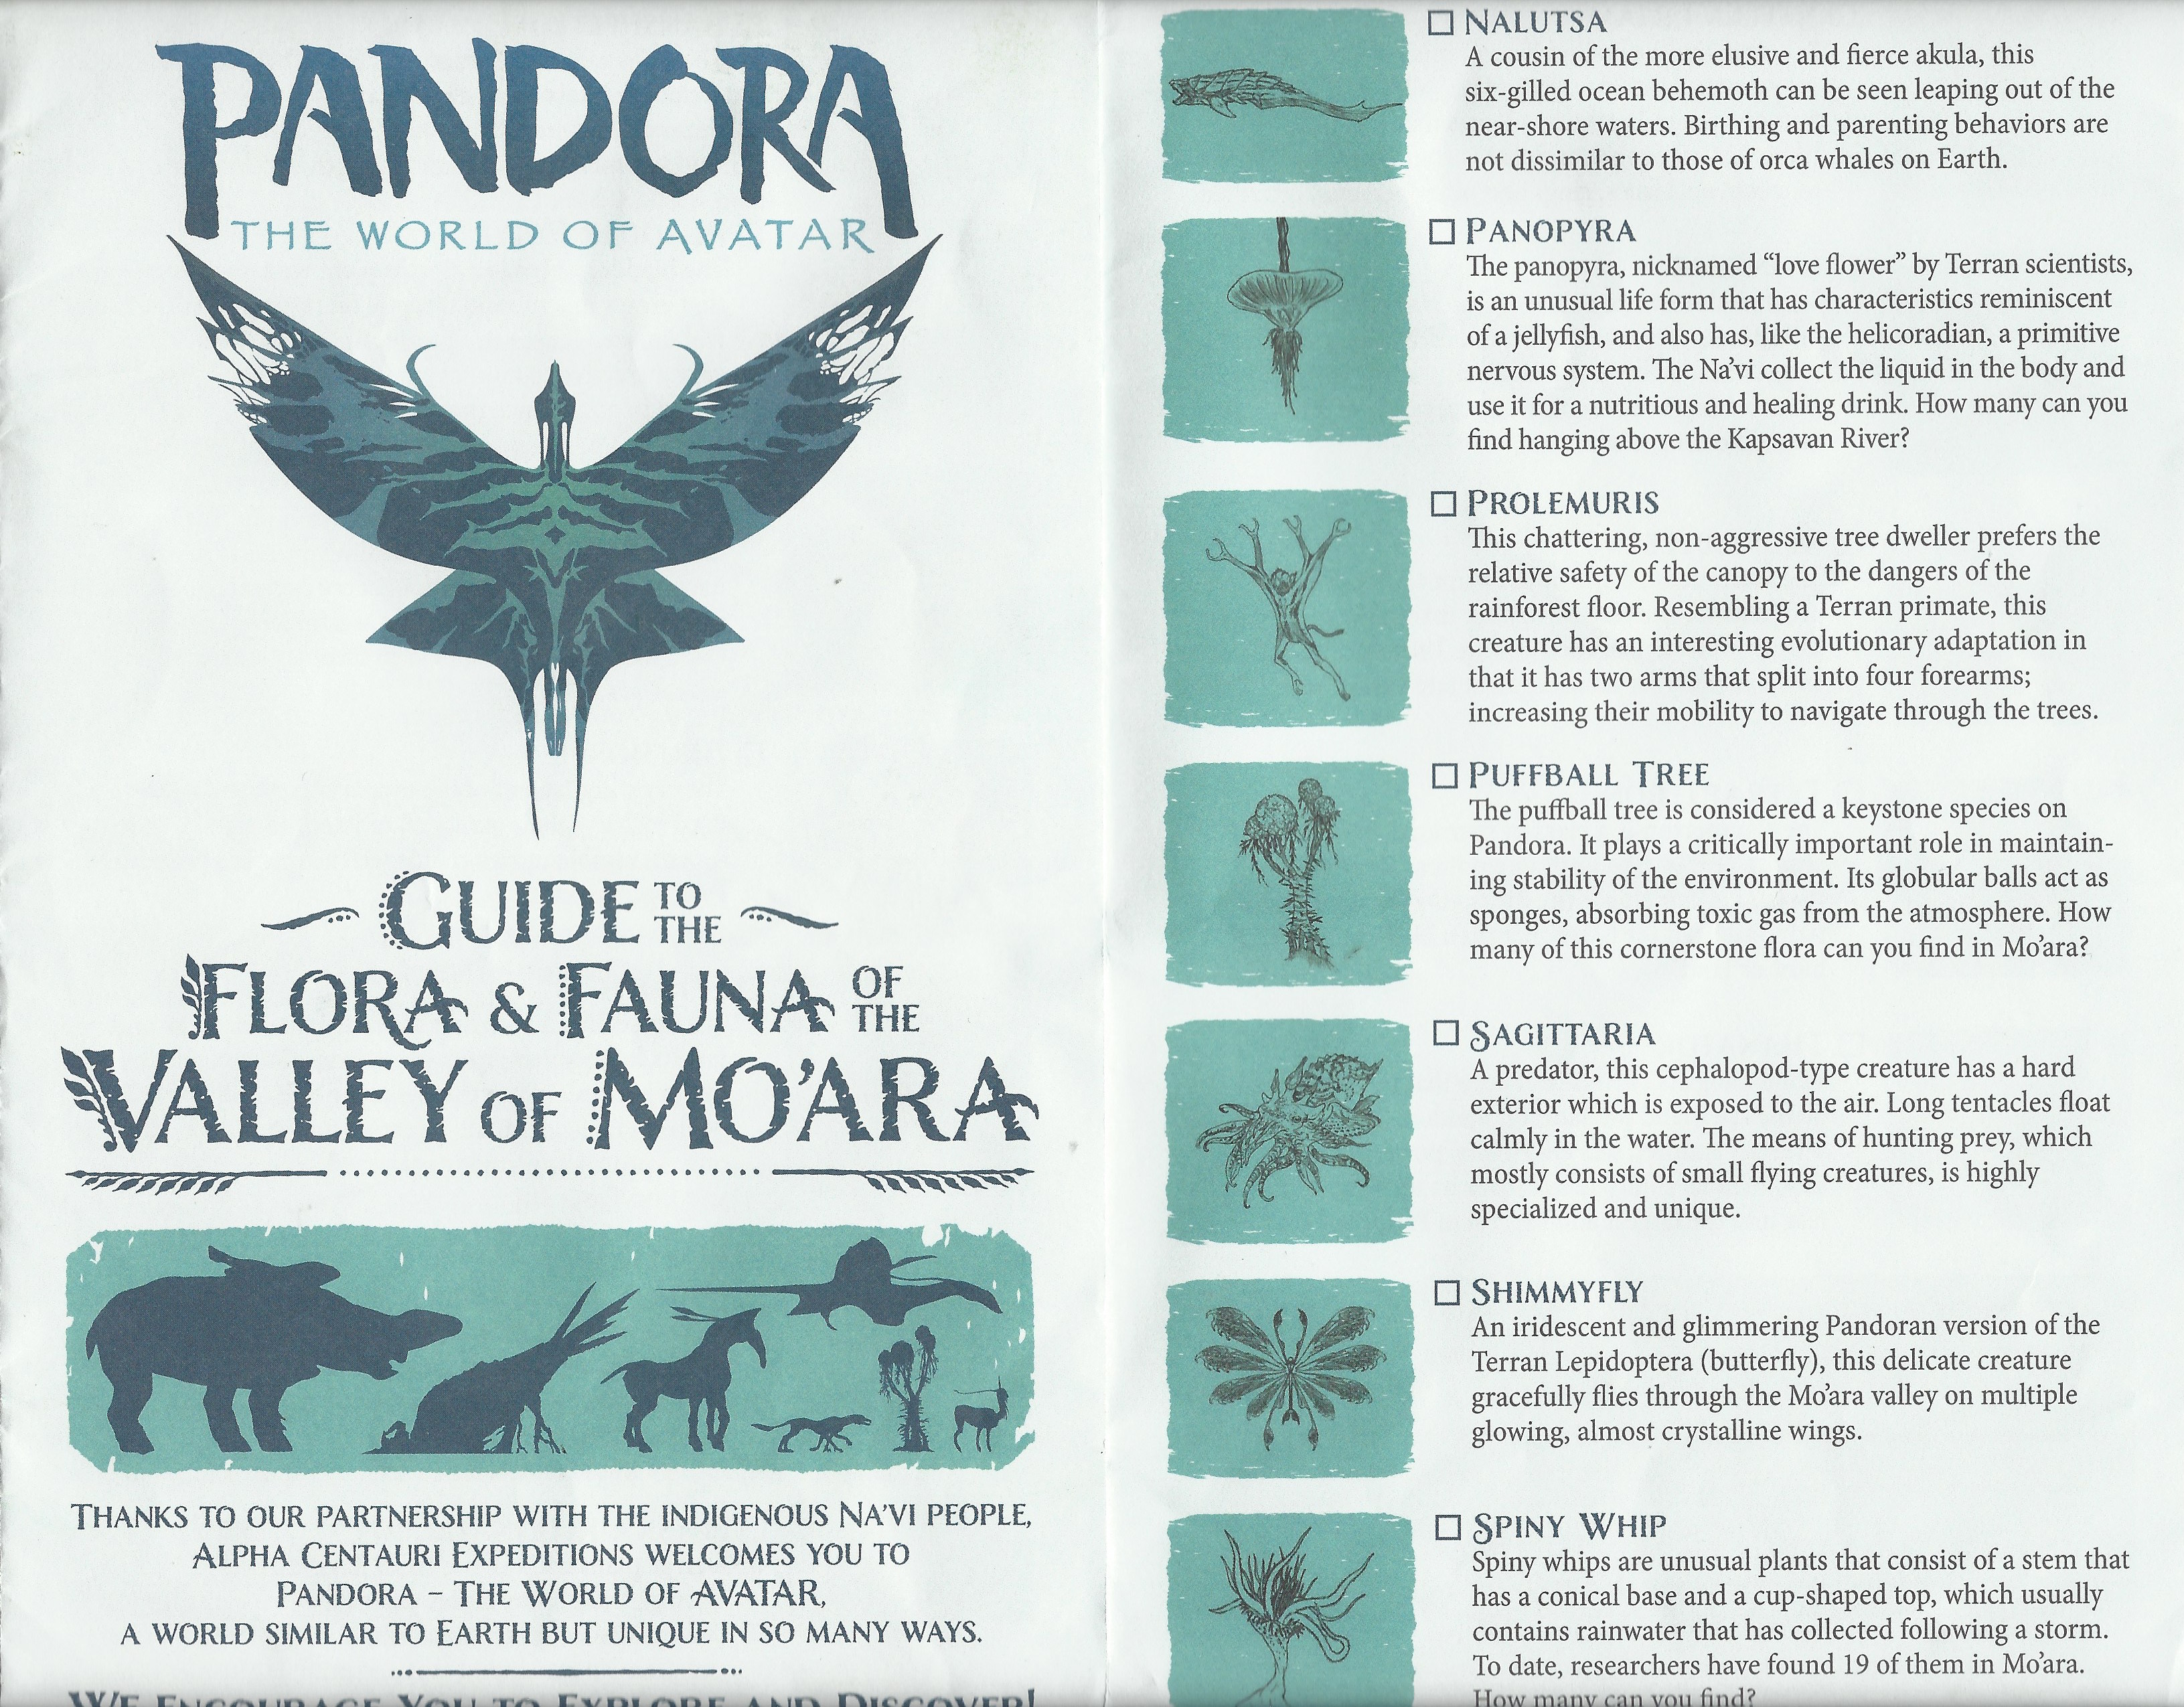 Our Review of Pandora